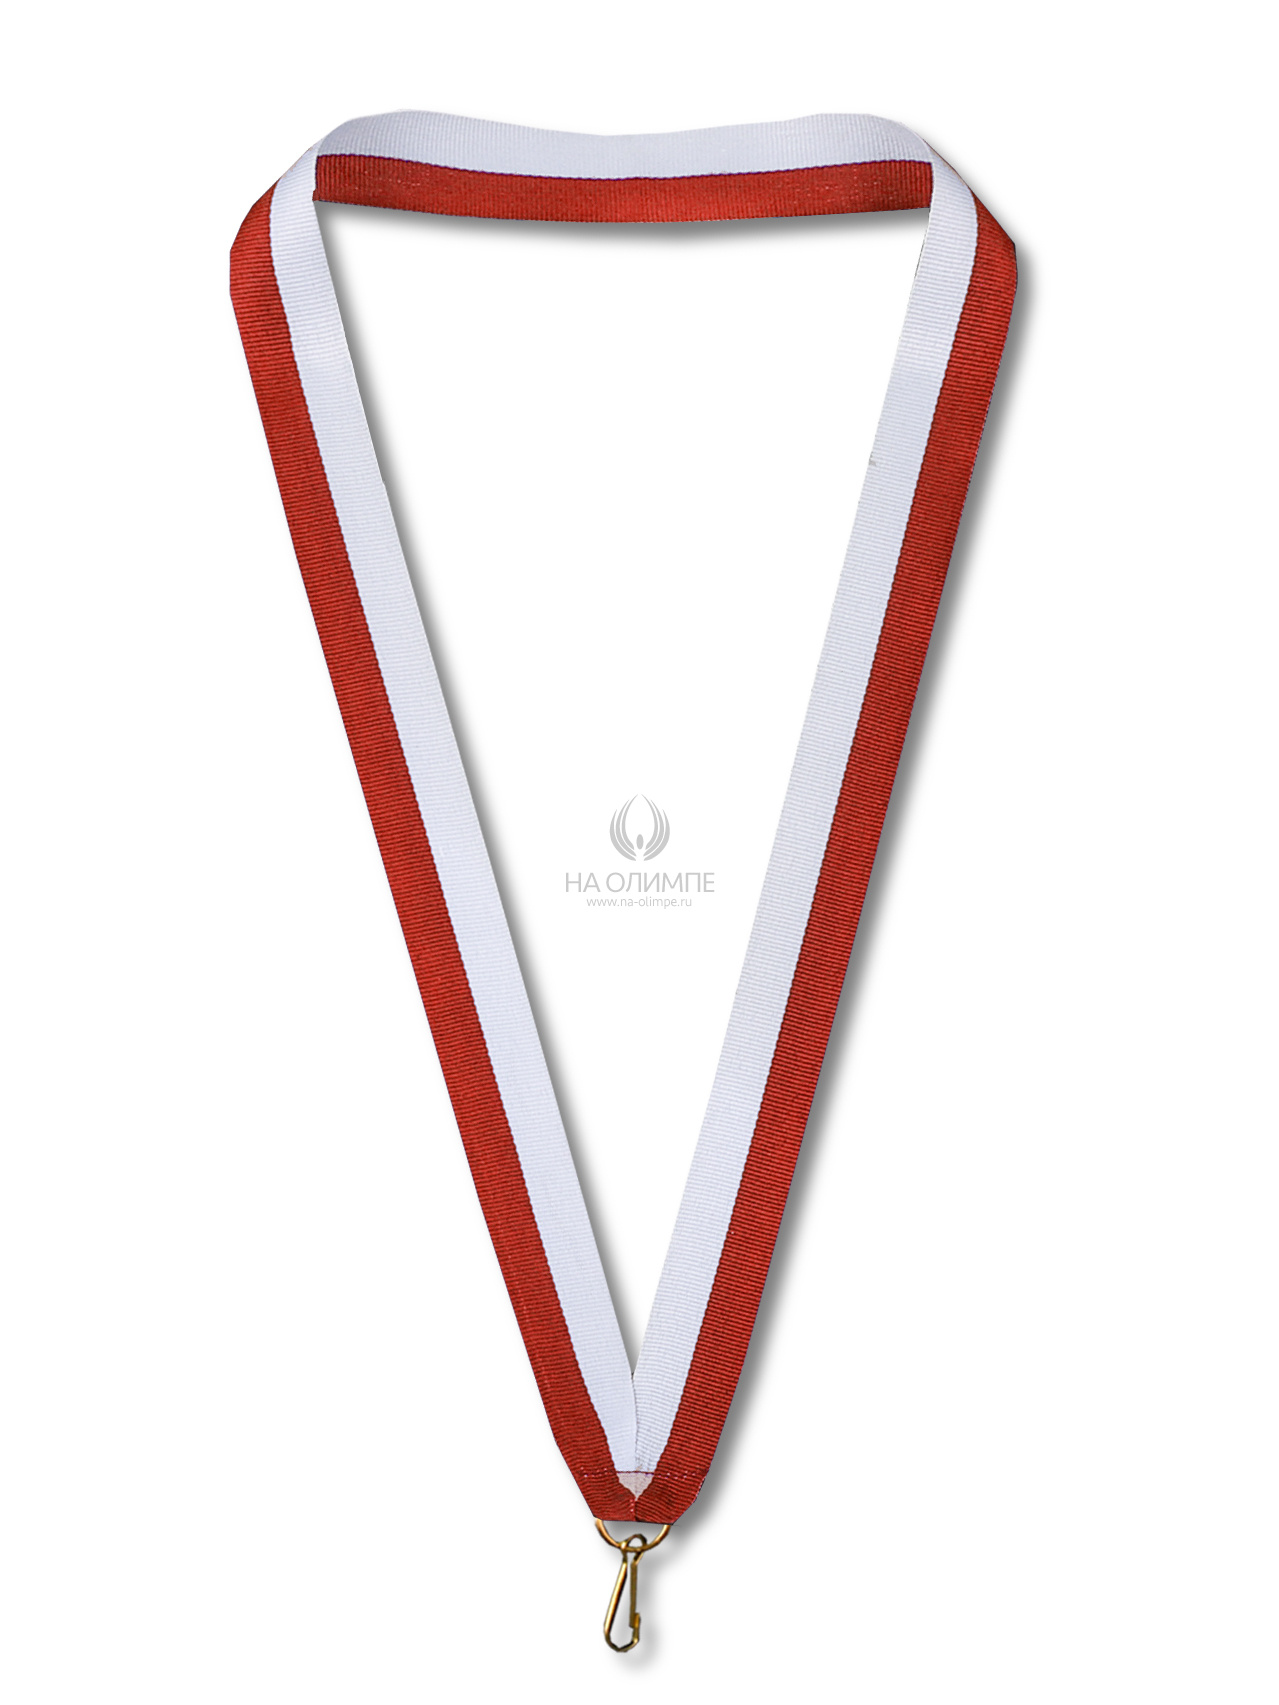 Лента для медали бело-красная 11мм, ширина ленты 11 мм